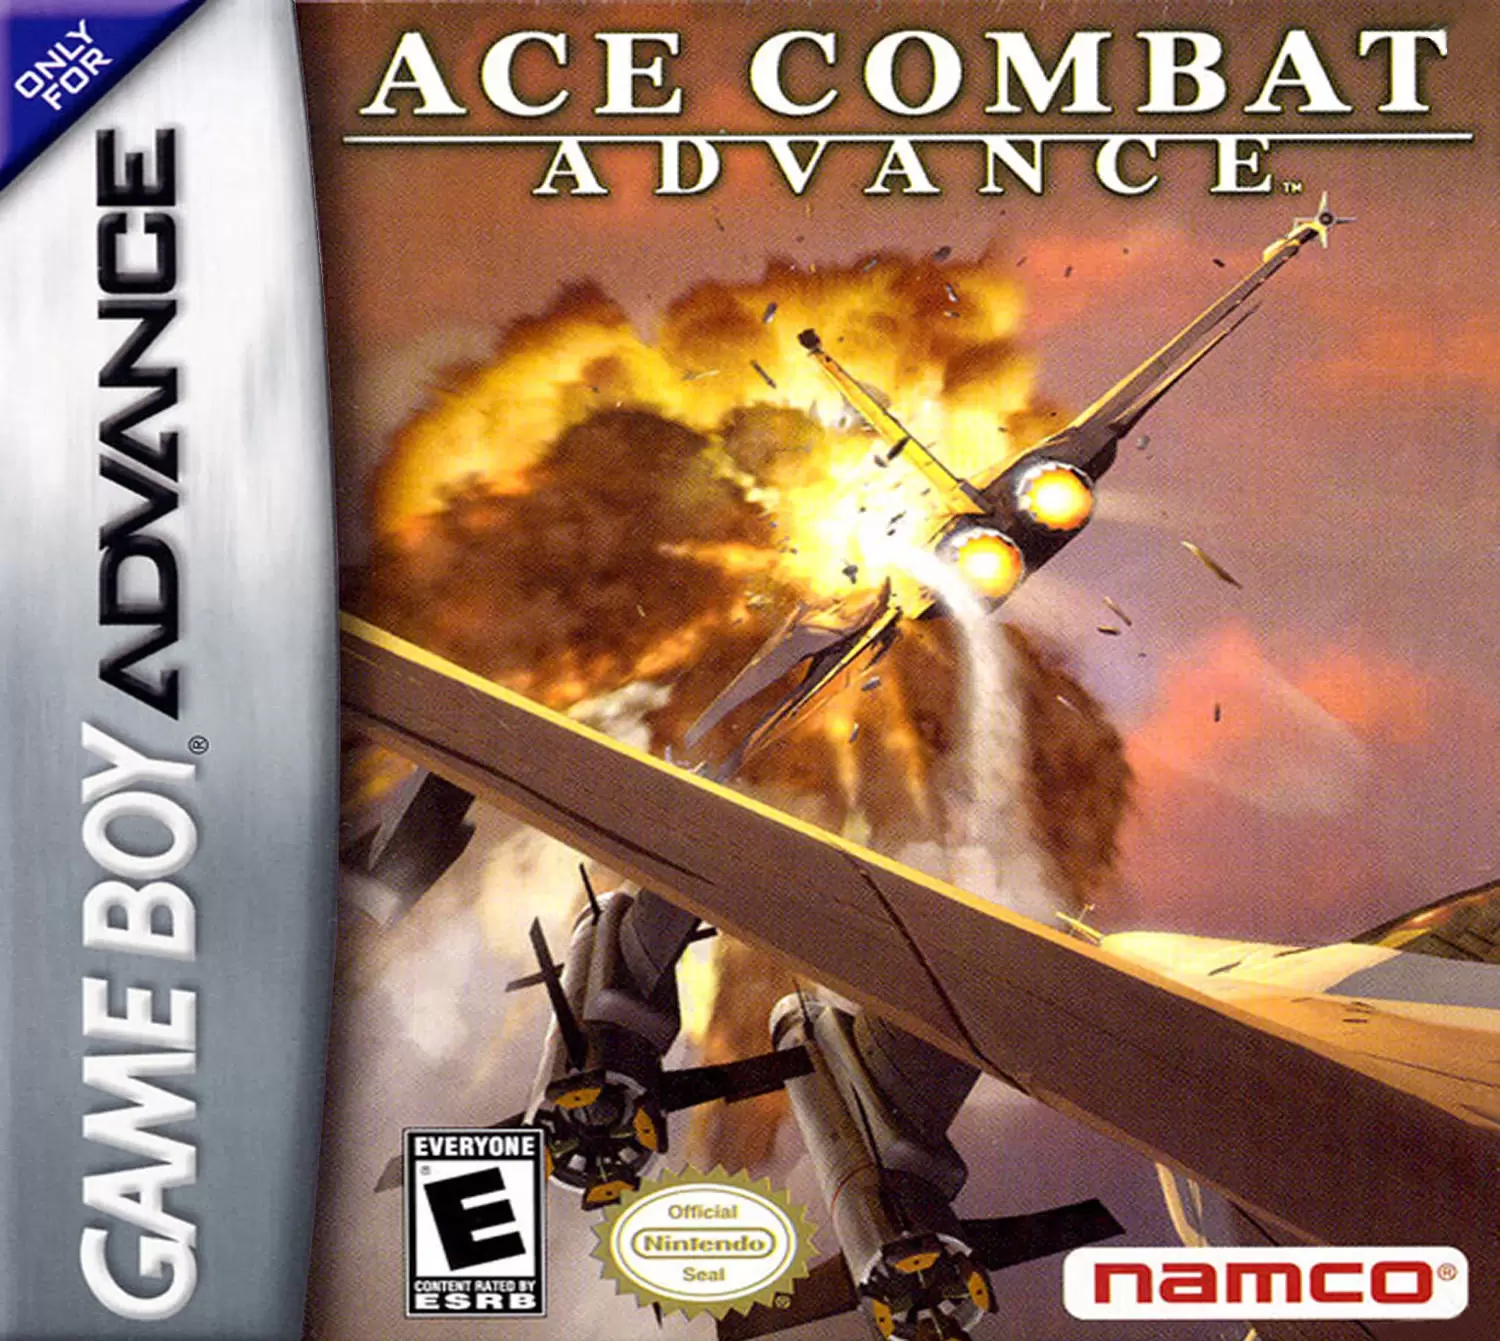 Game Boy Advance Games - Ace Combat Advance